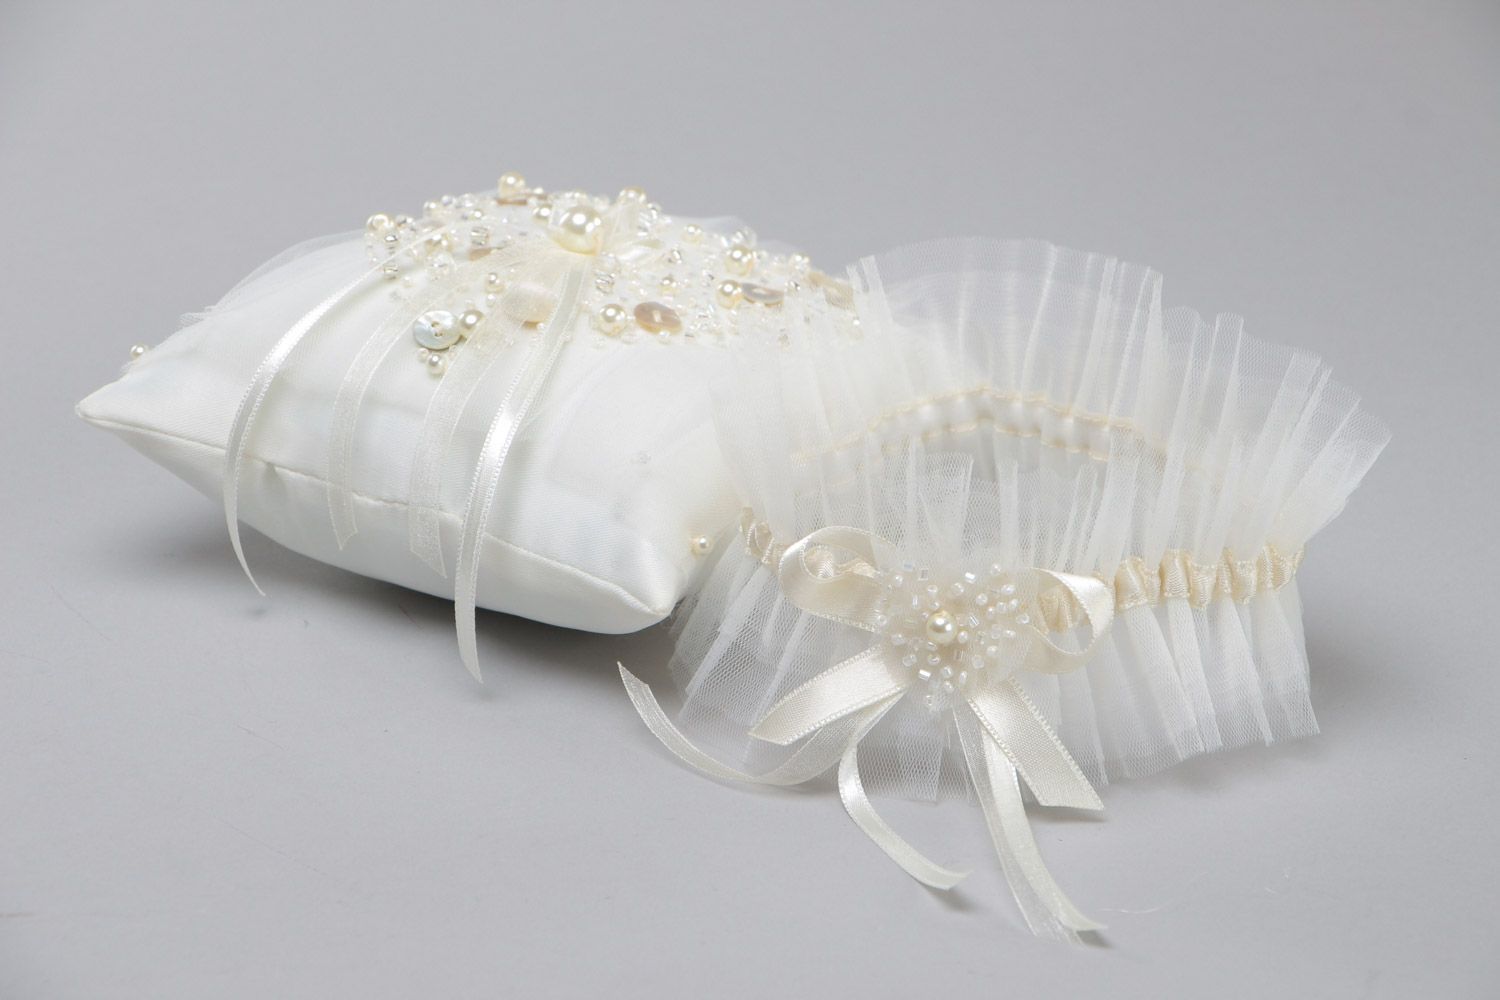 Handmade wedding accessories set 2 items bridal garter and ring bearer pillow Ivory photo 3